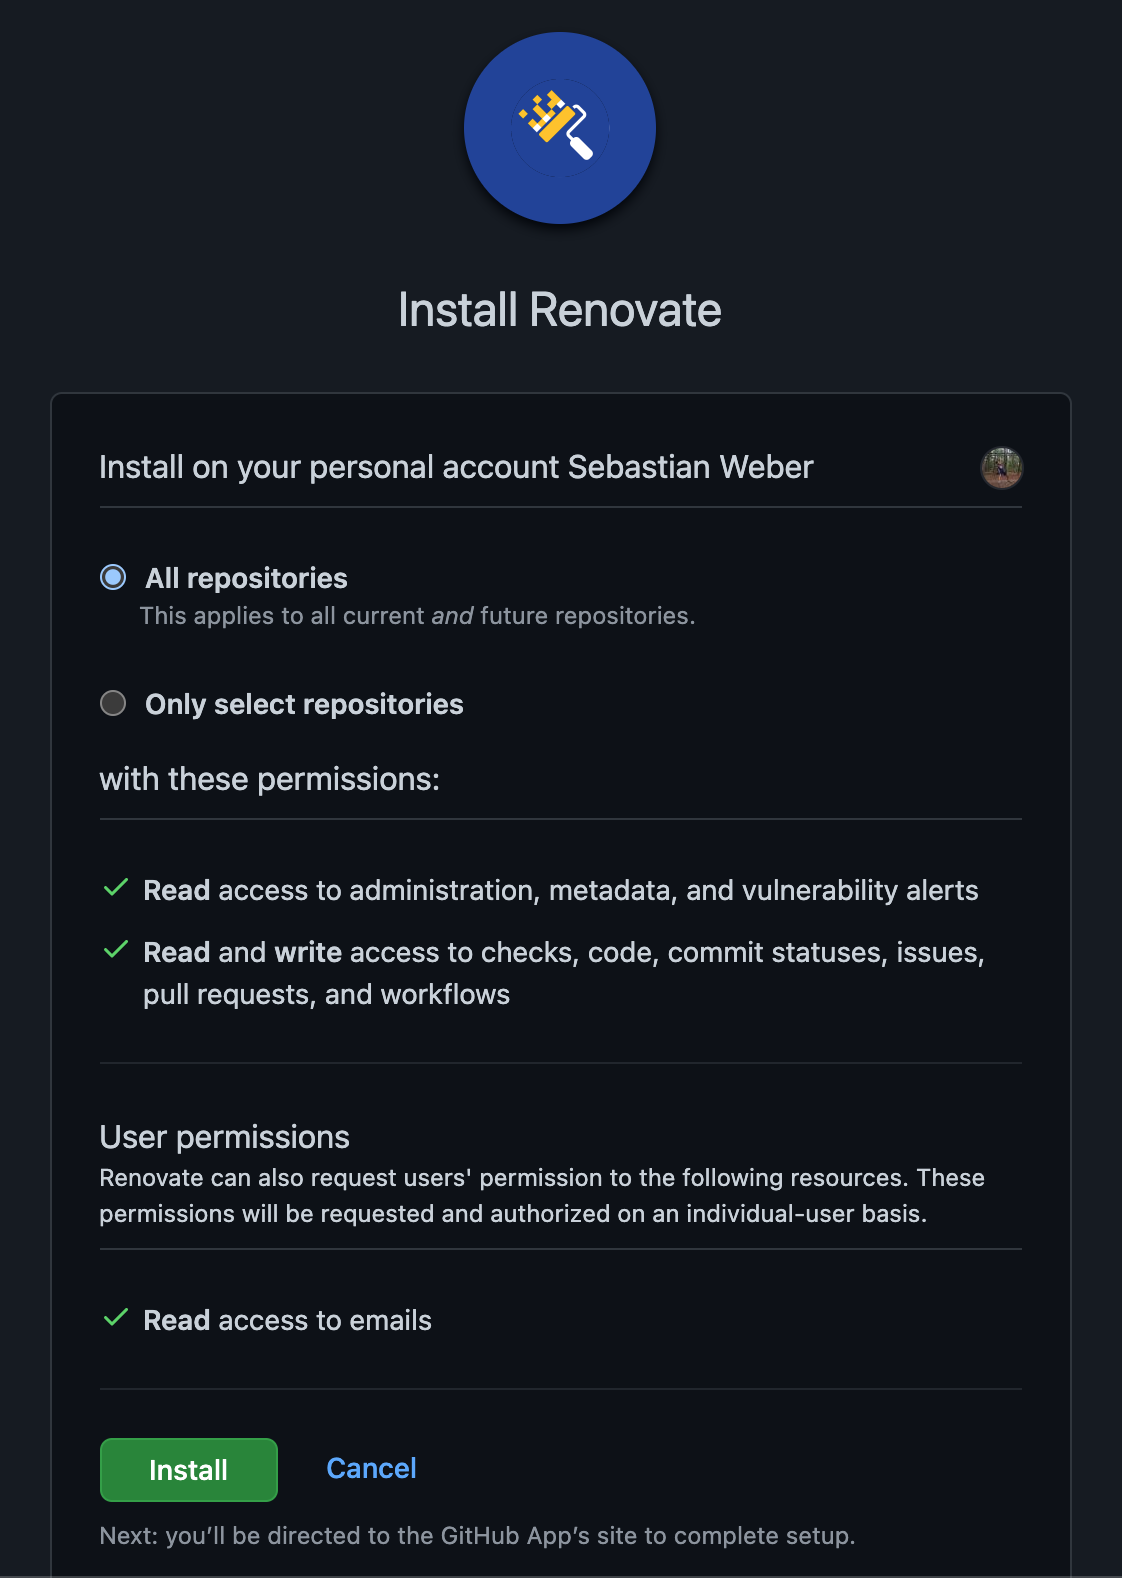 Install the Renovate app in GitHub.